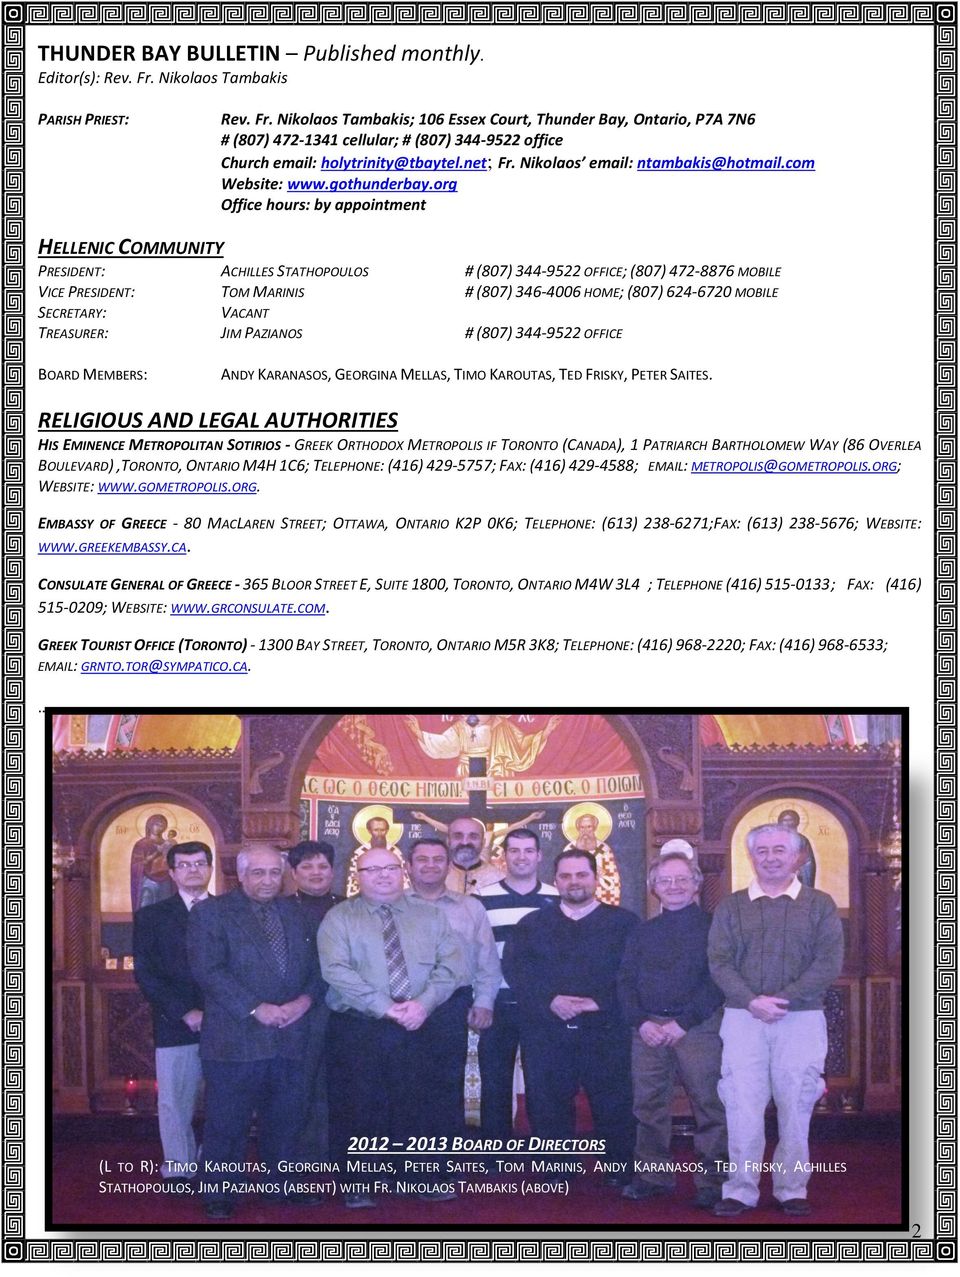 net; Fr. Nikolaos email: ntambakis@hotmail.com Website: www.gothunderbay.